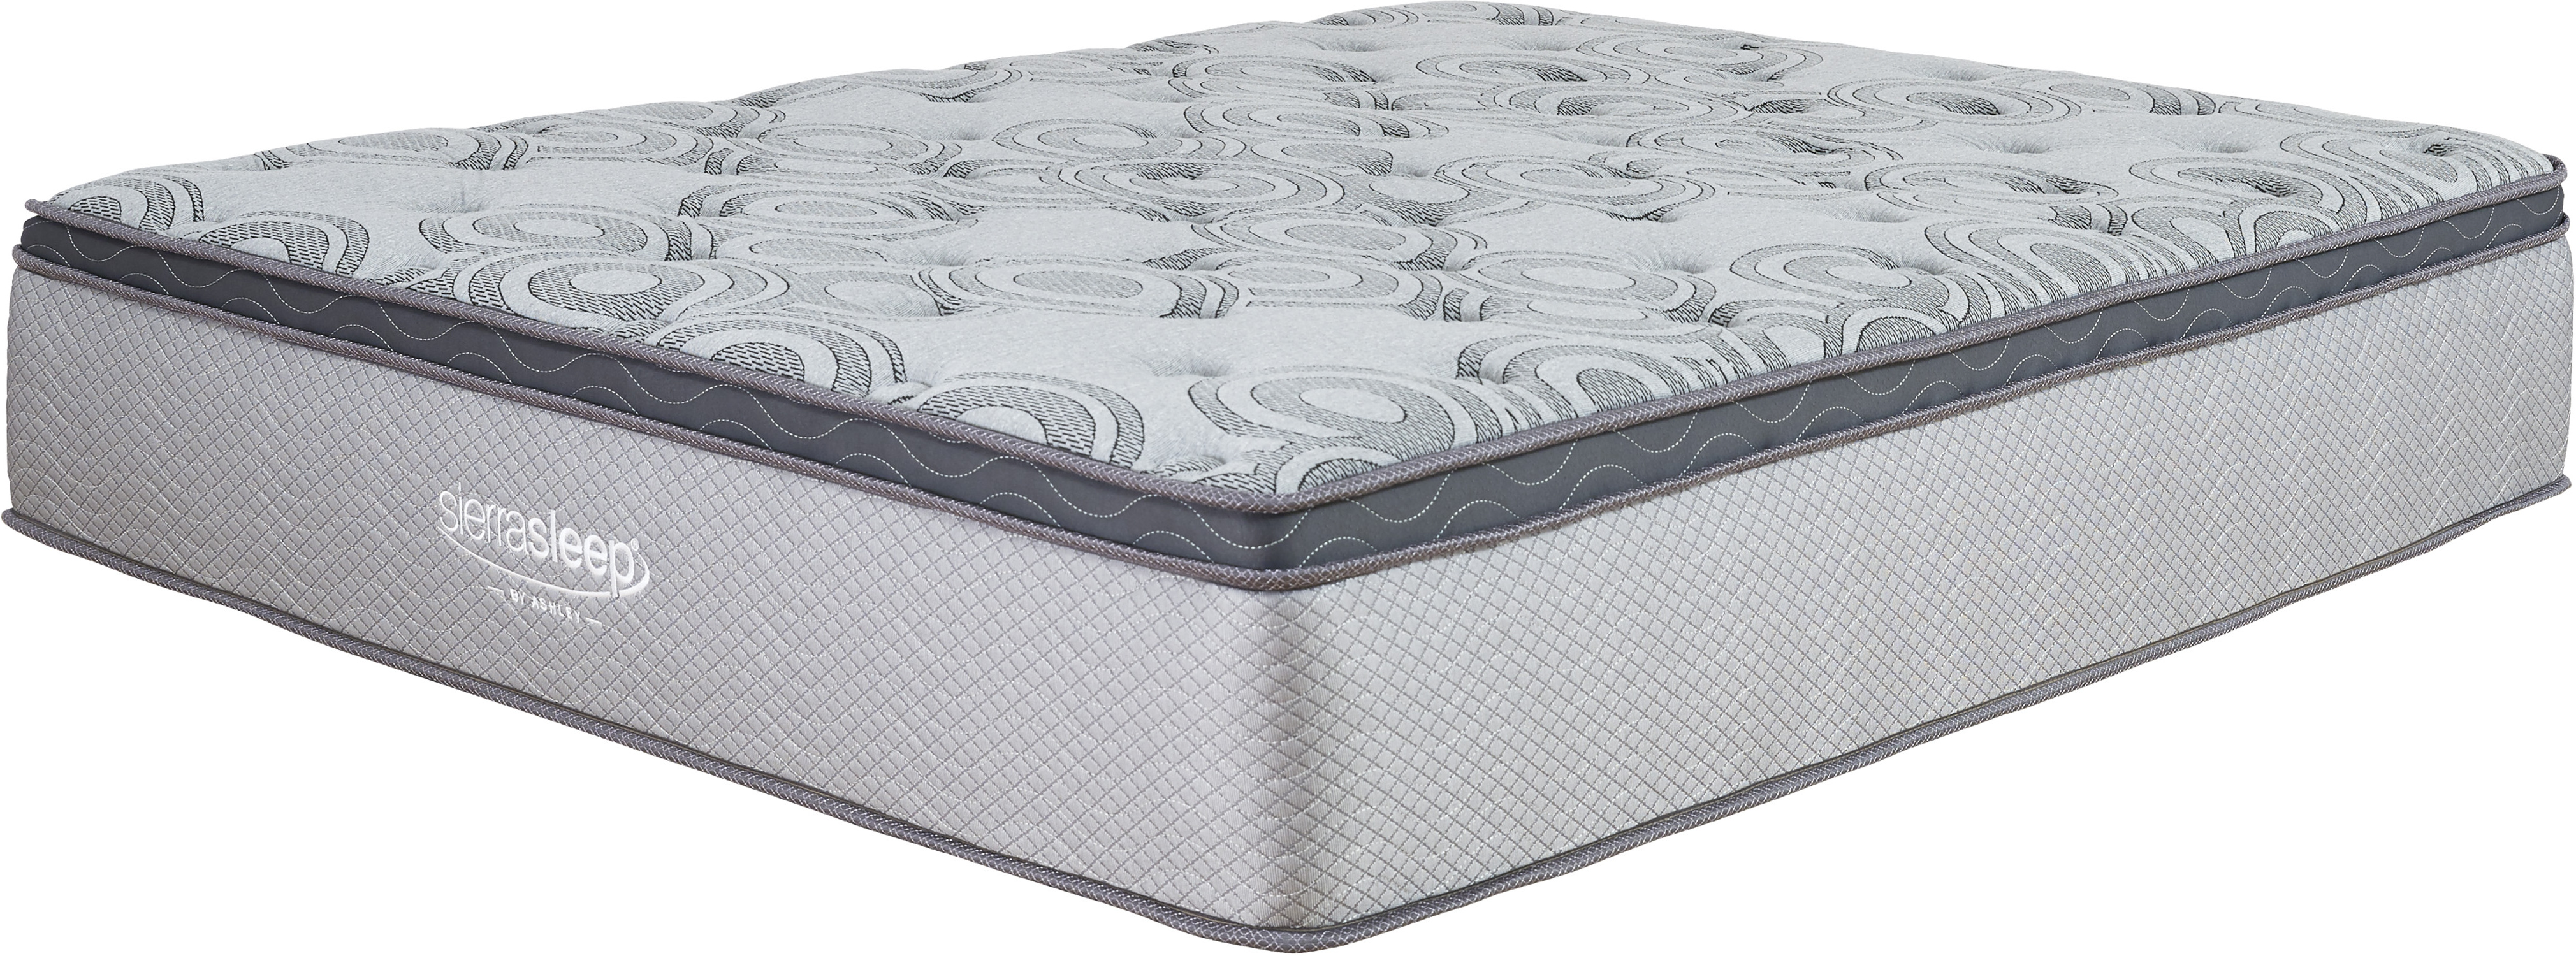 augusta haven memory foam mattress